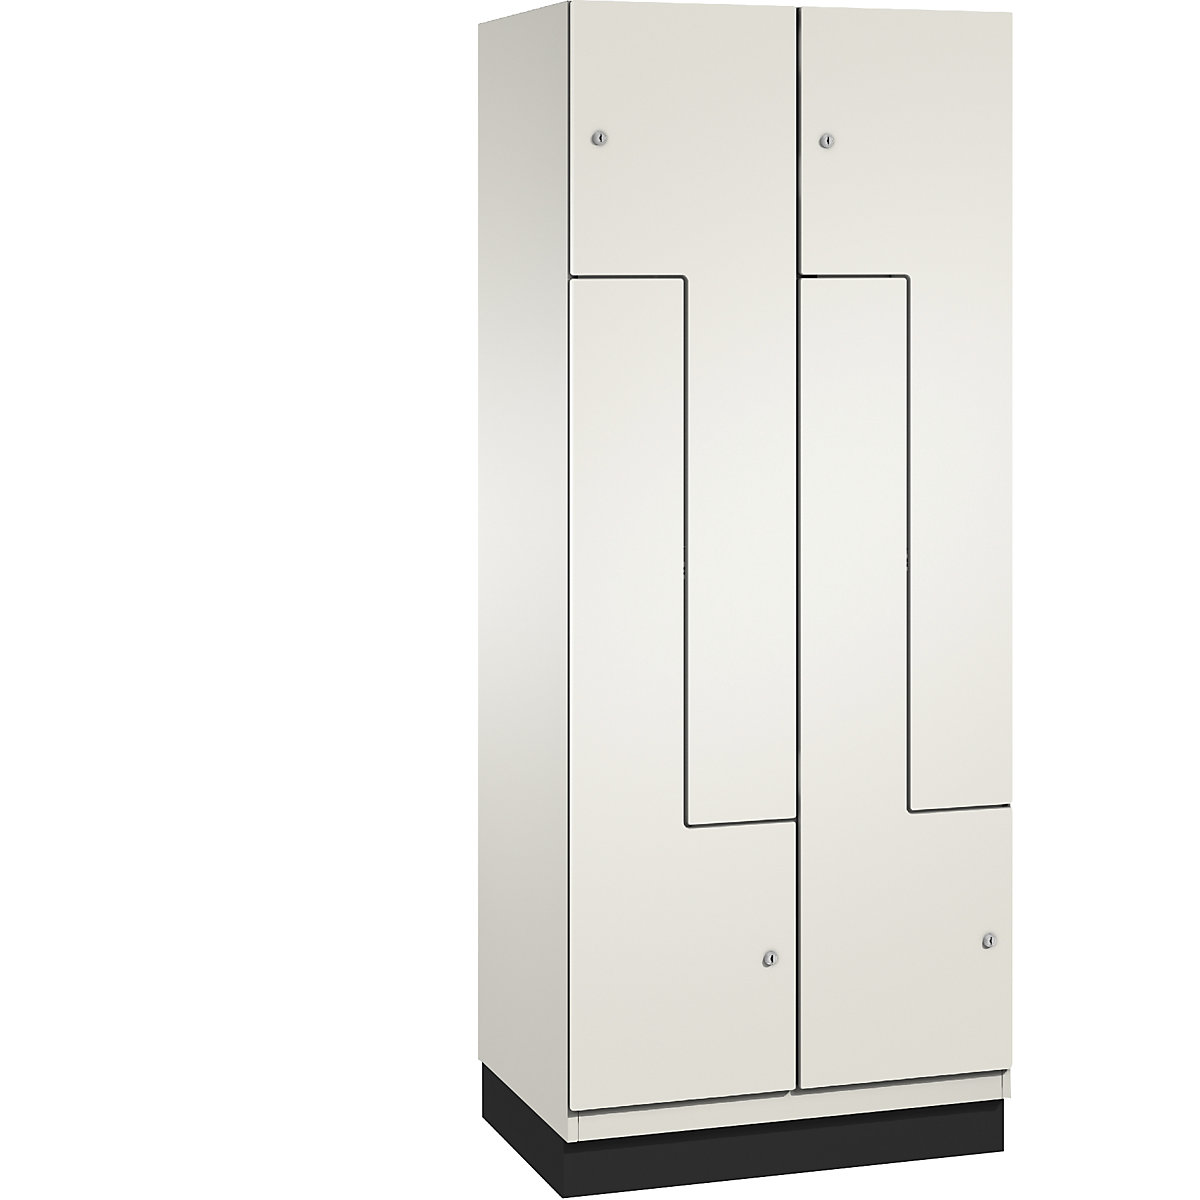 mm Z kaiserkraft compartments, 800 | unit C+P: – locker cloakroom 2 width CAMBIO